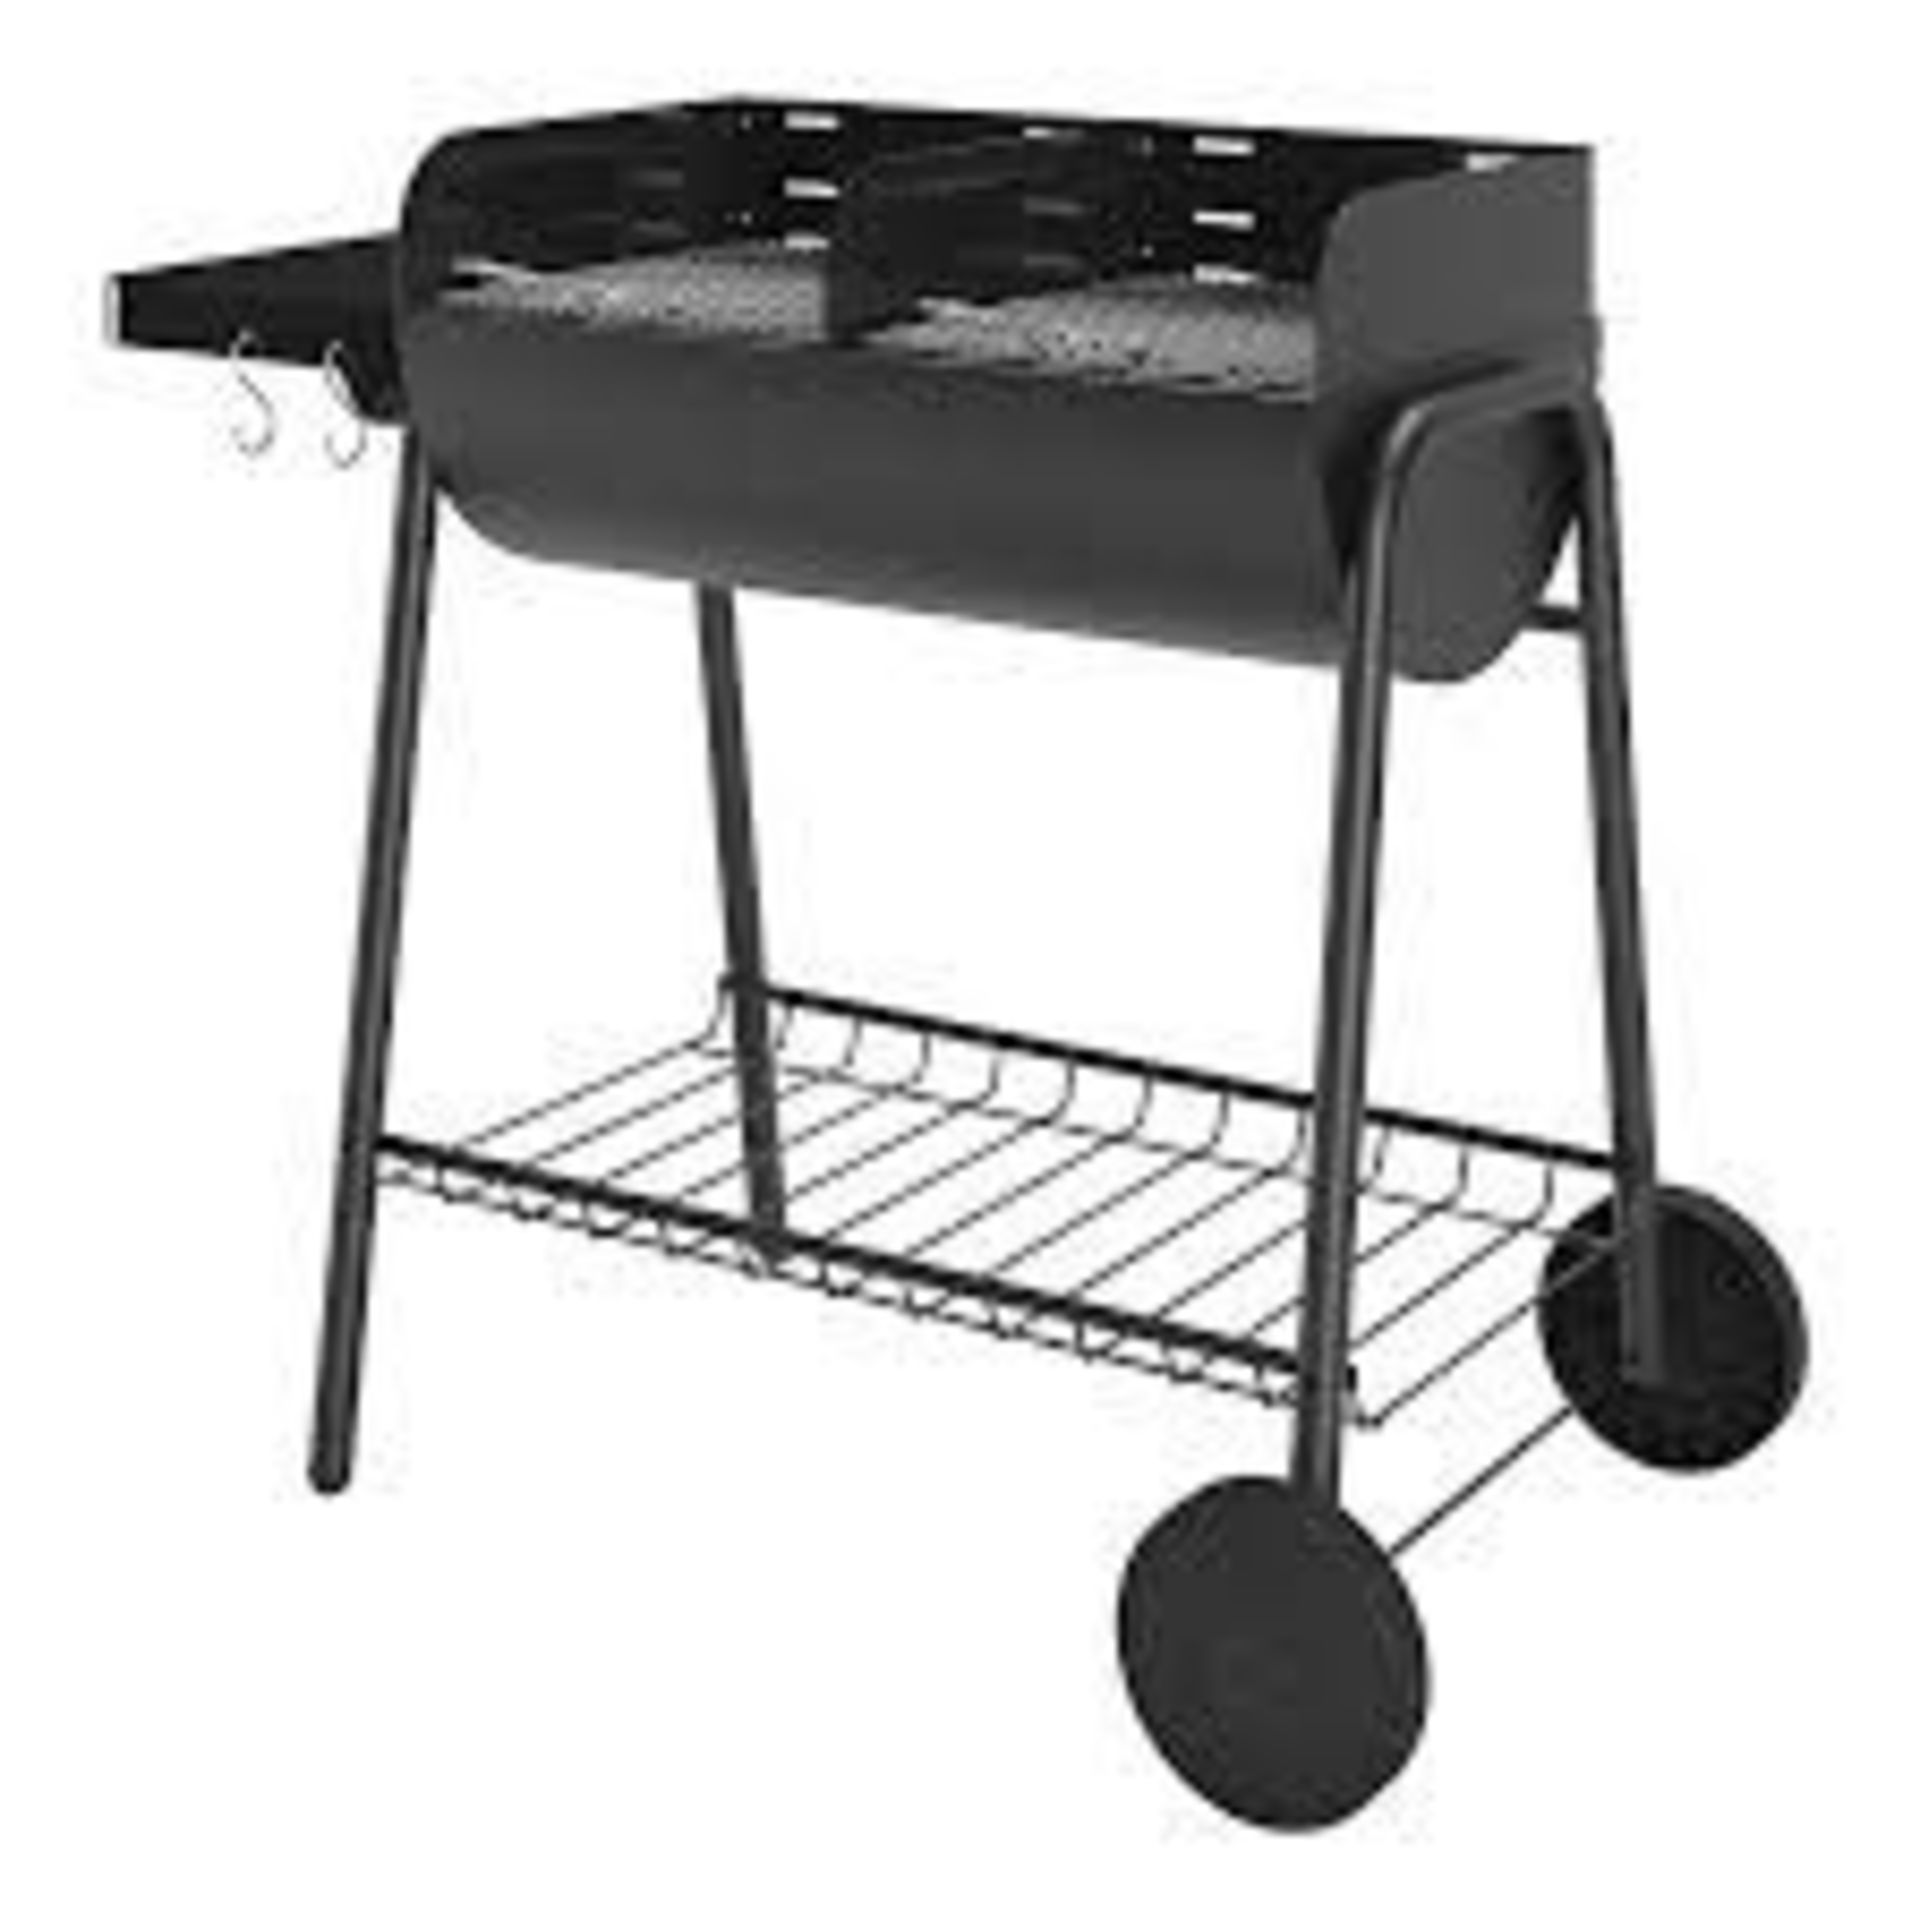 GoodHome Pondera Black Charcoal Barbecue. - PW. The GoodHome Pondera charcoal barbecue features a